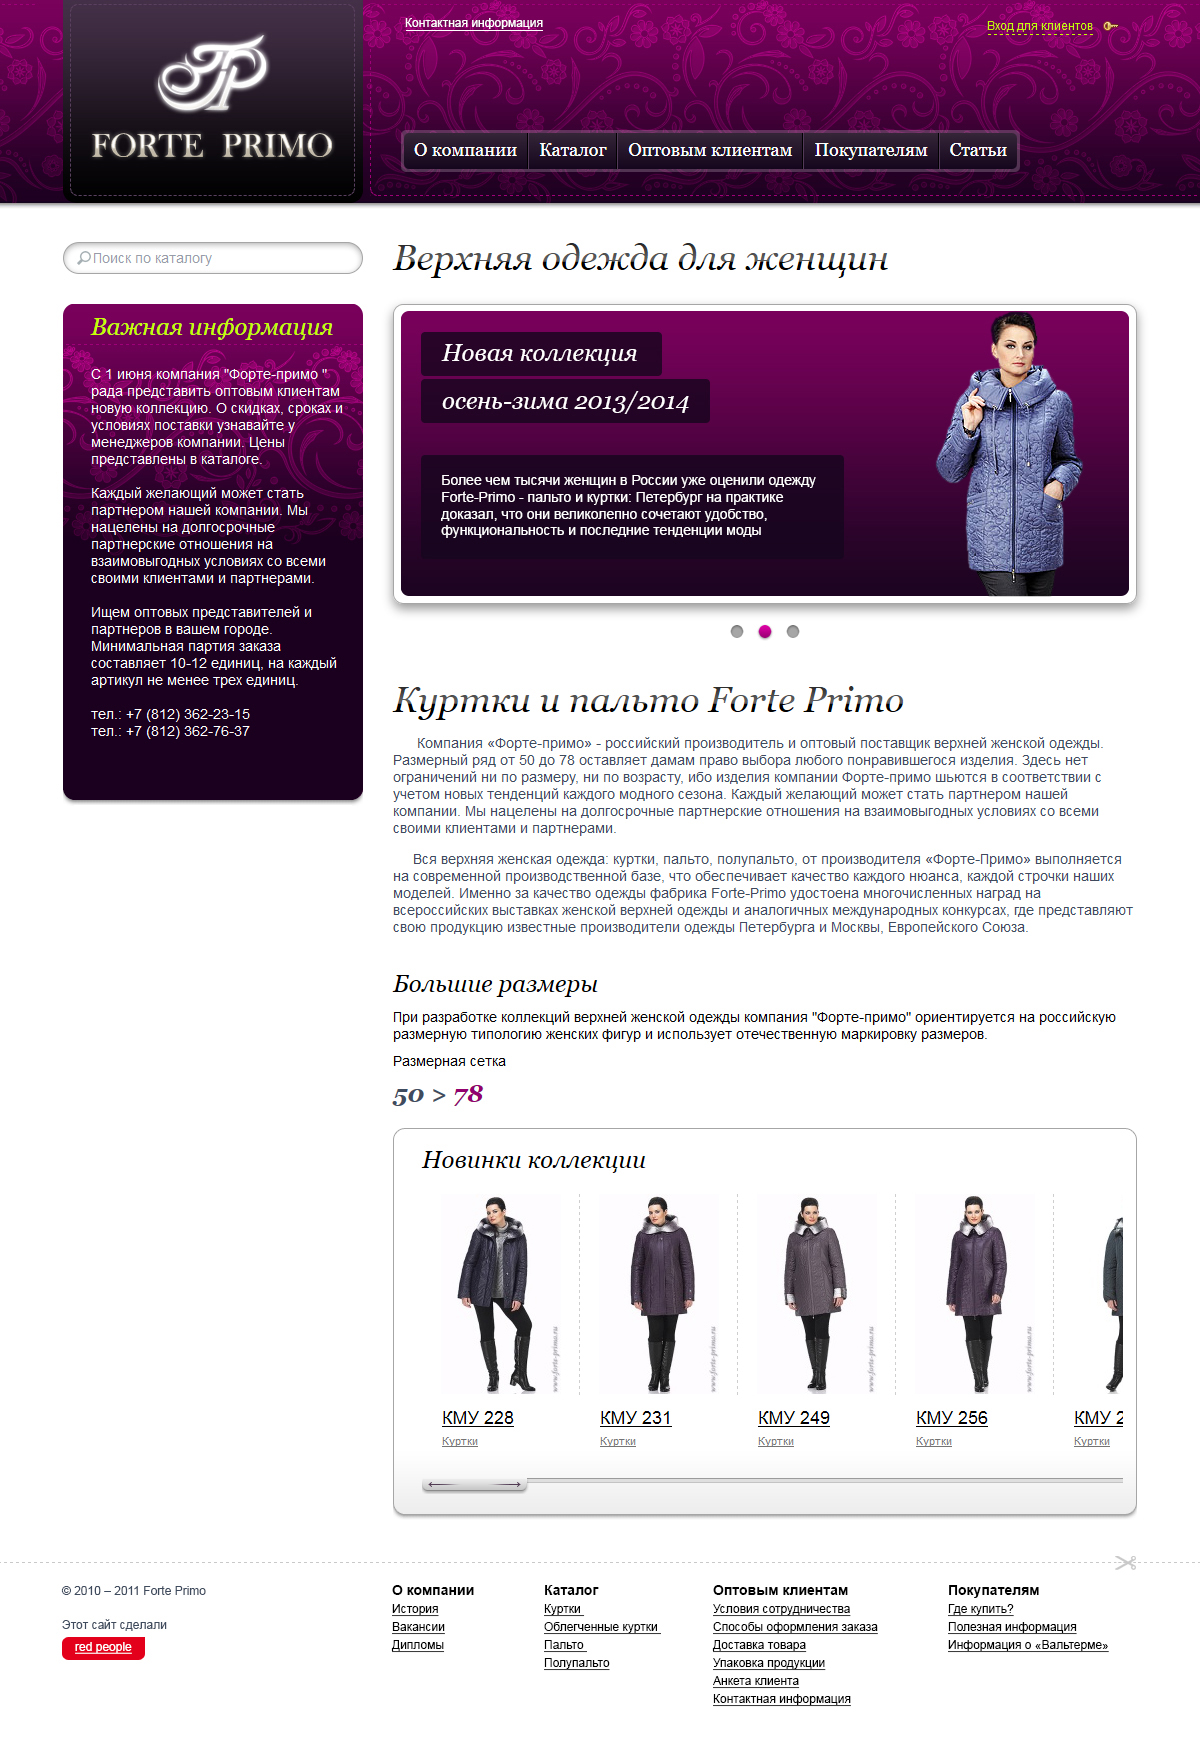 Forte primo — главная страница